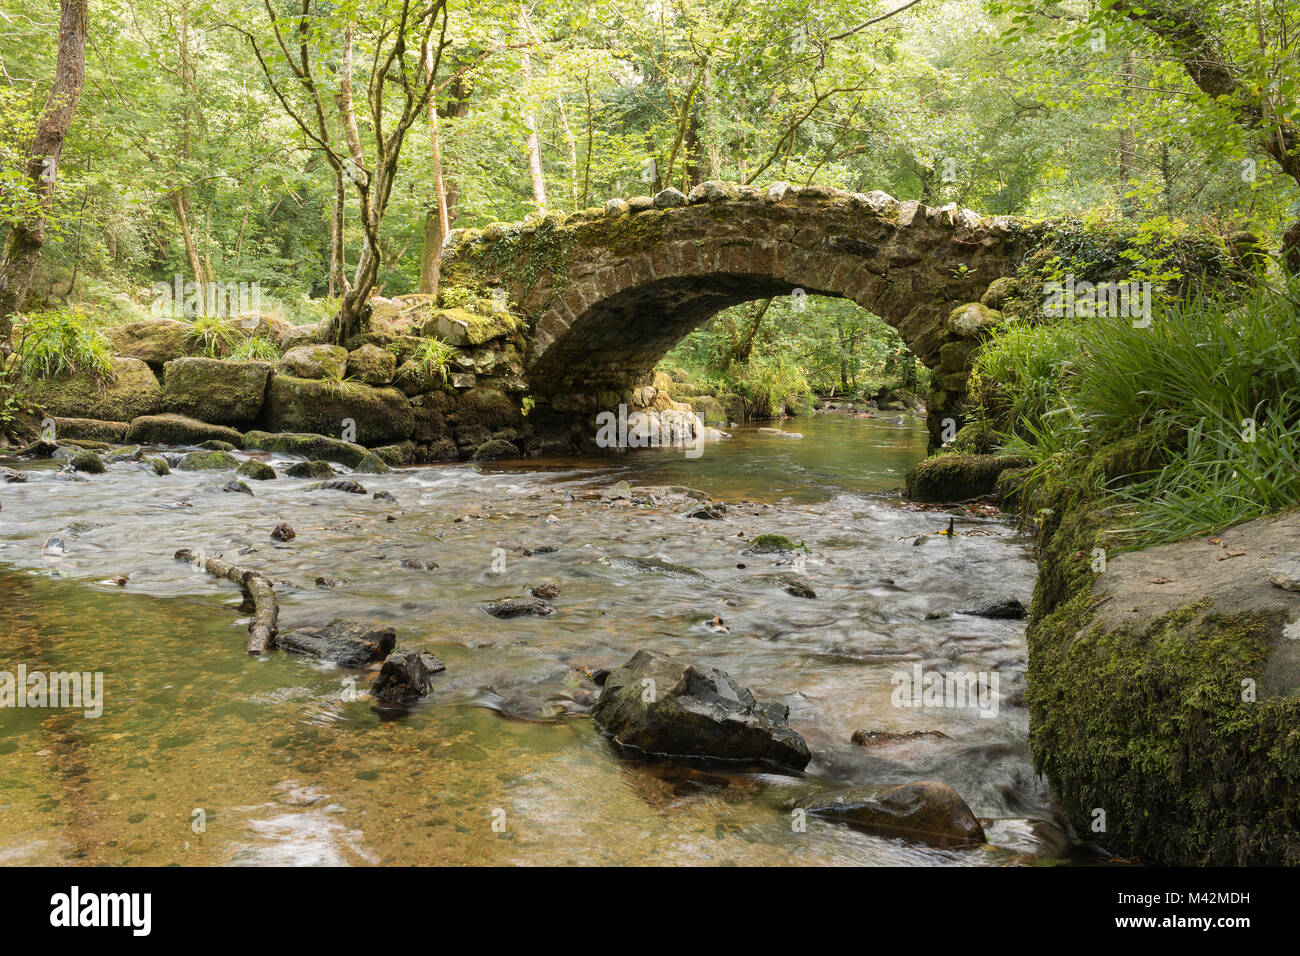 An image of Hisley Bridge, Dartmoor National Park, Devon, England, UK. Stock Photo